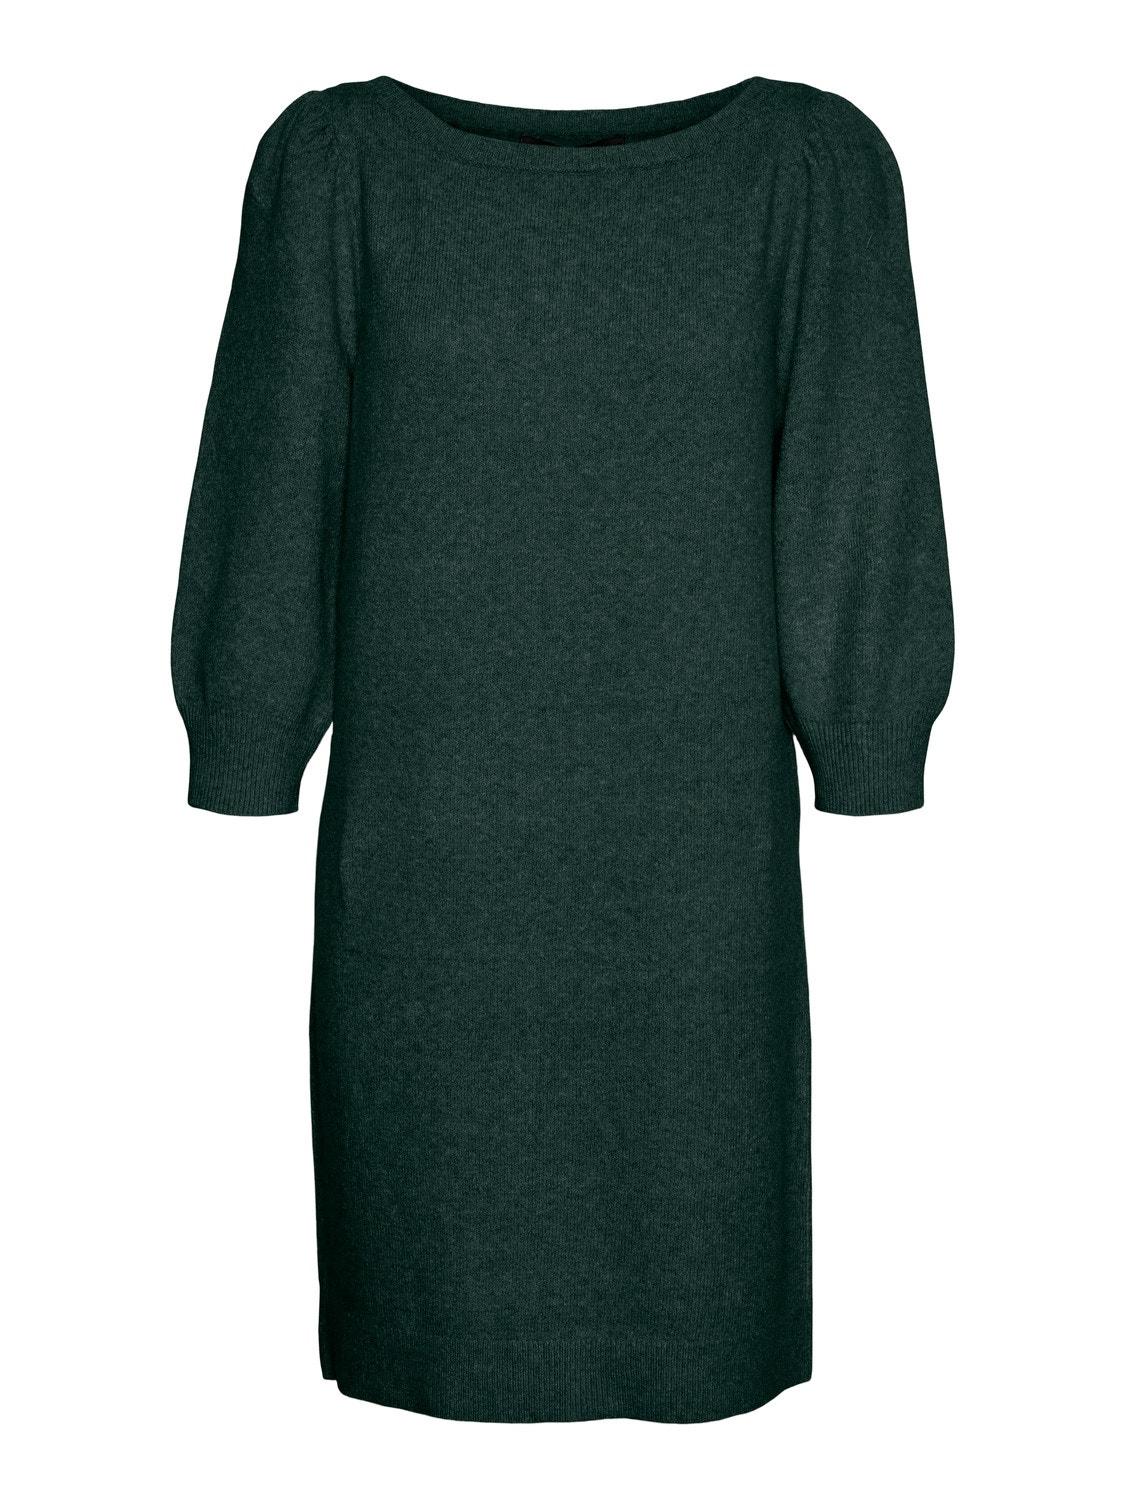 Vero Moda VMDOFFY Short dress -Pine Grove - 10268018